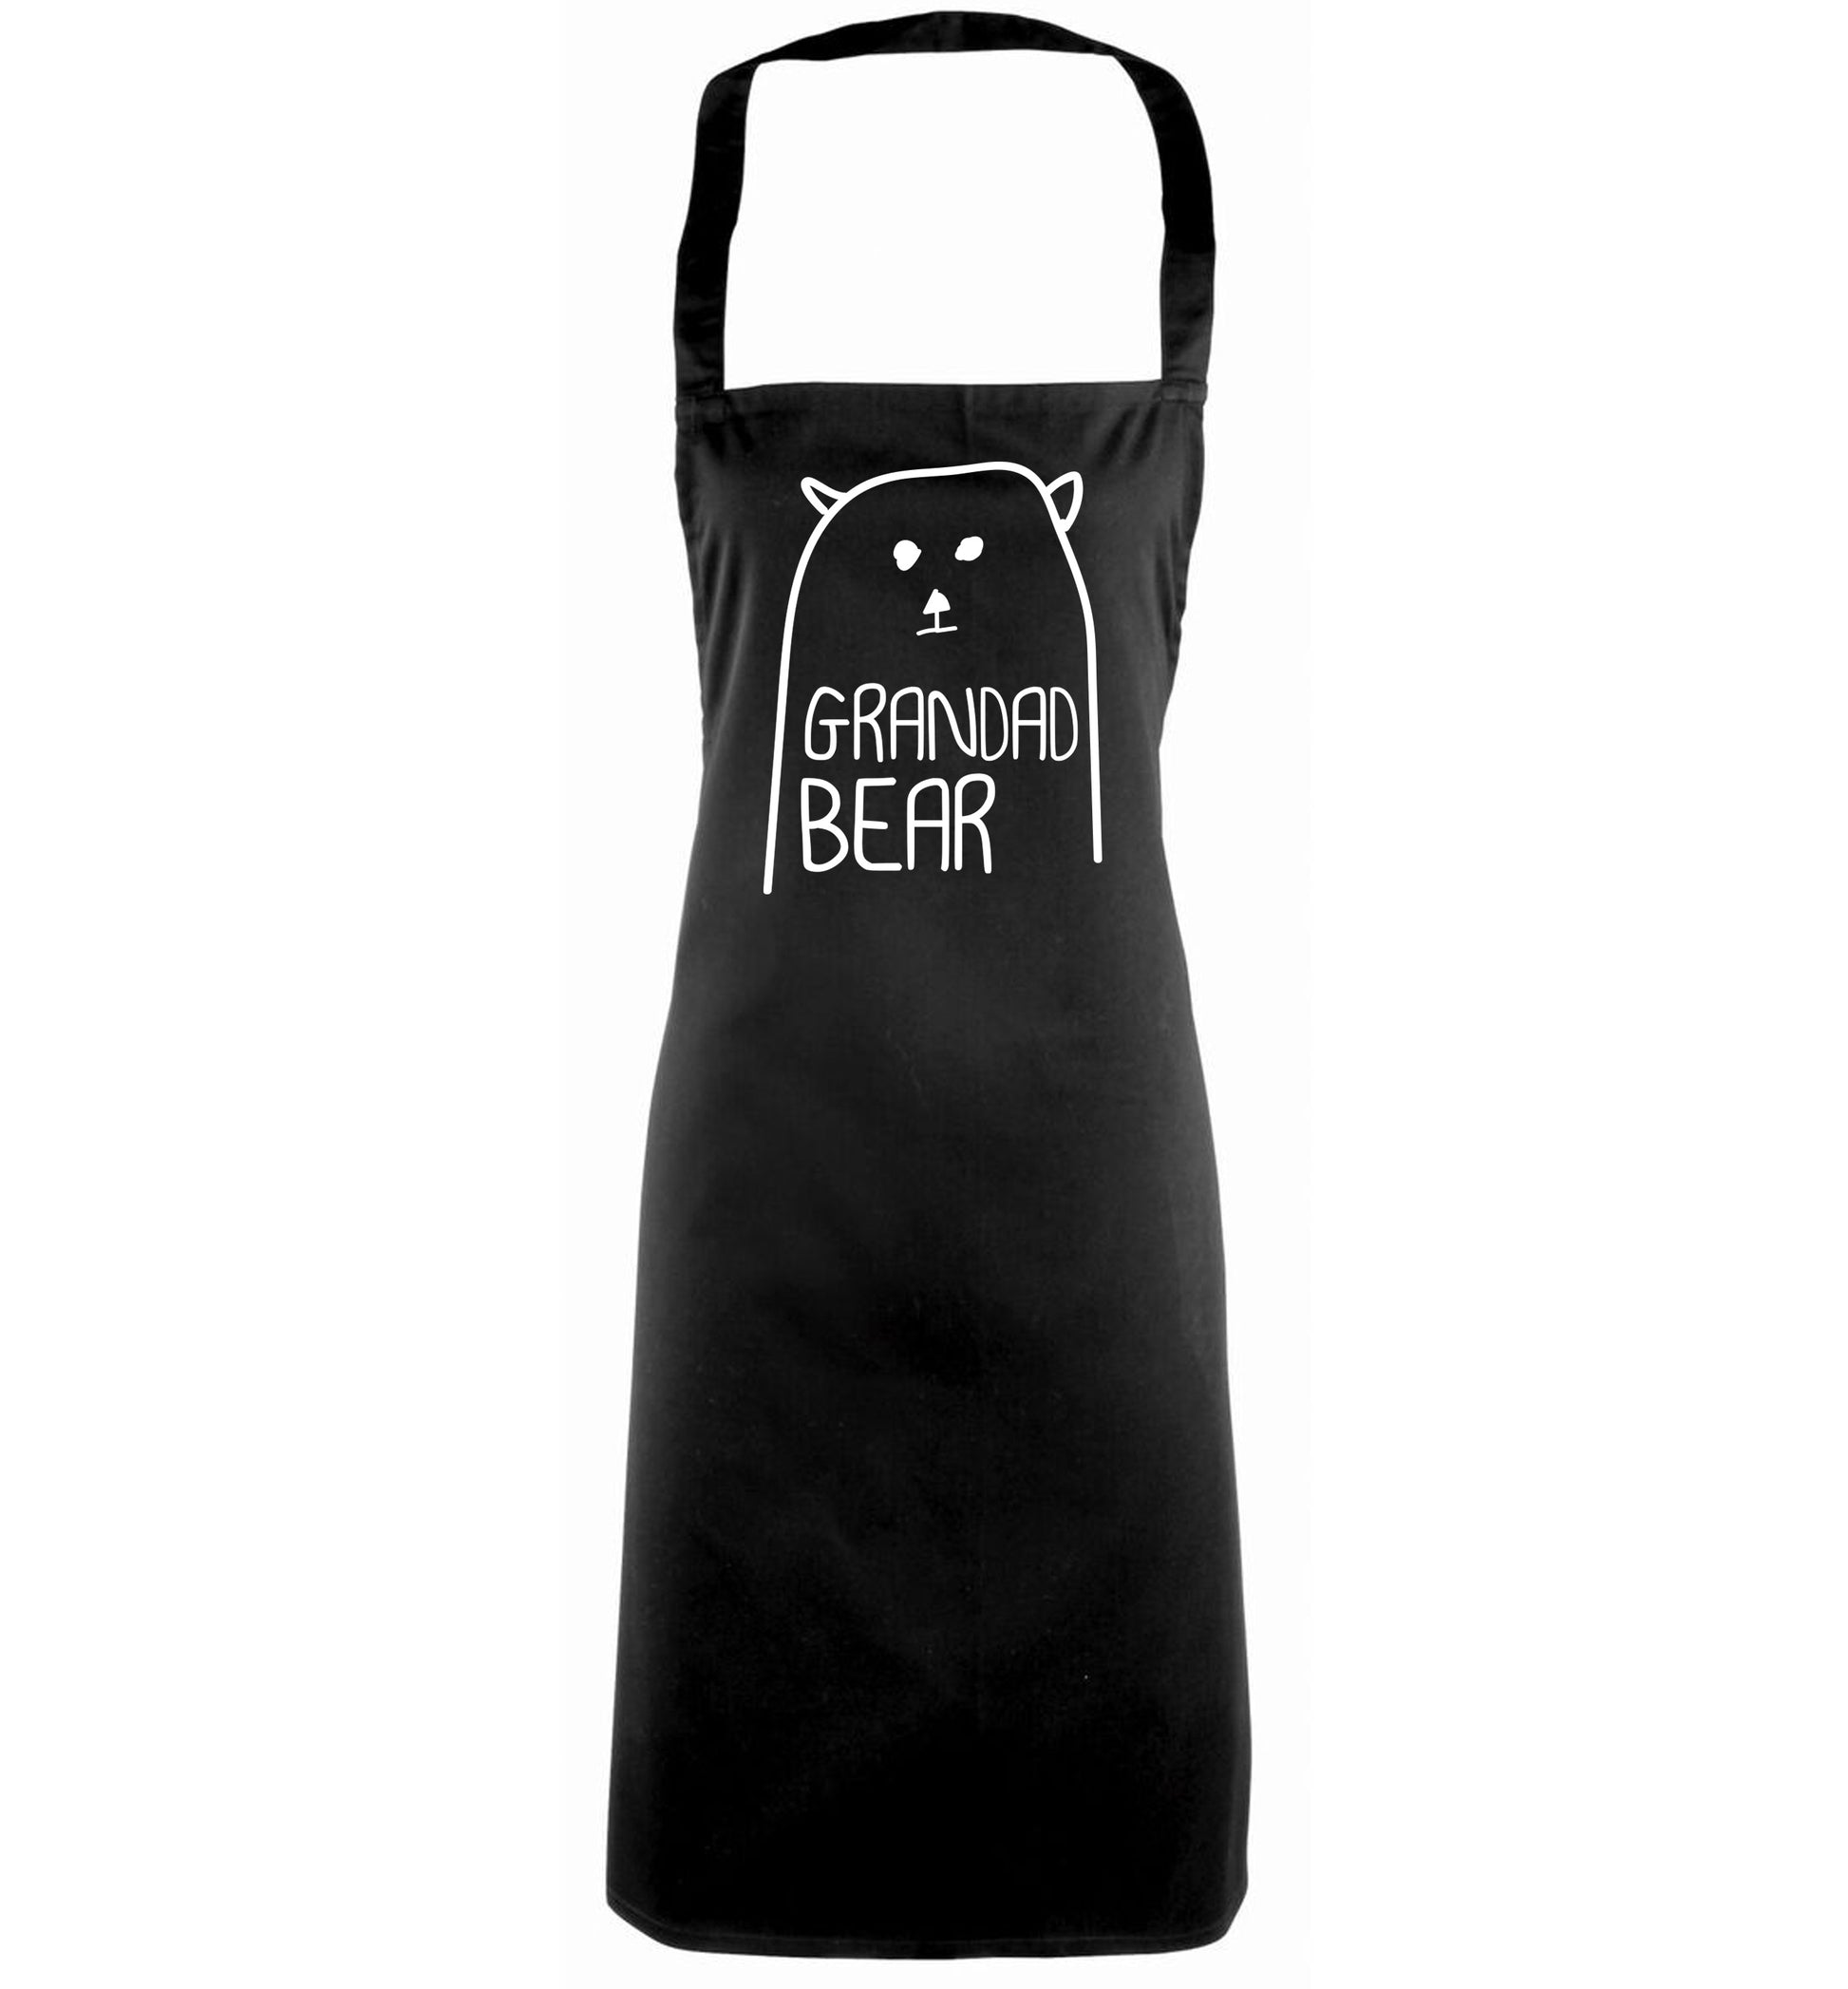 Grandad bear black apron